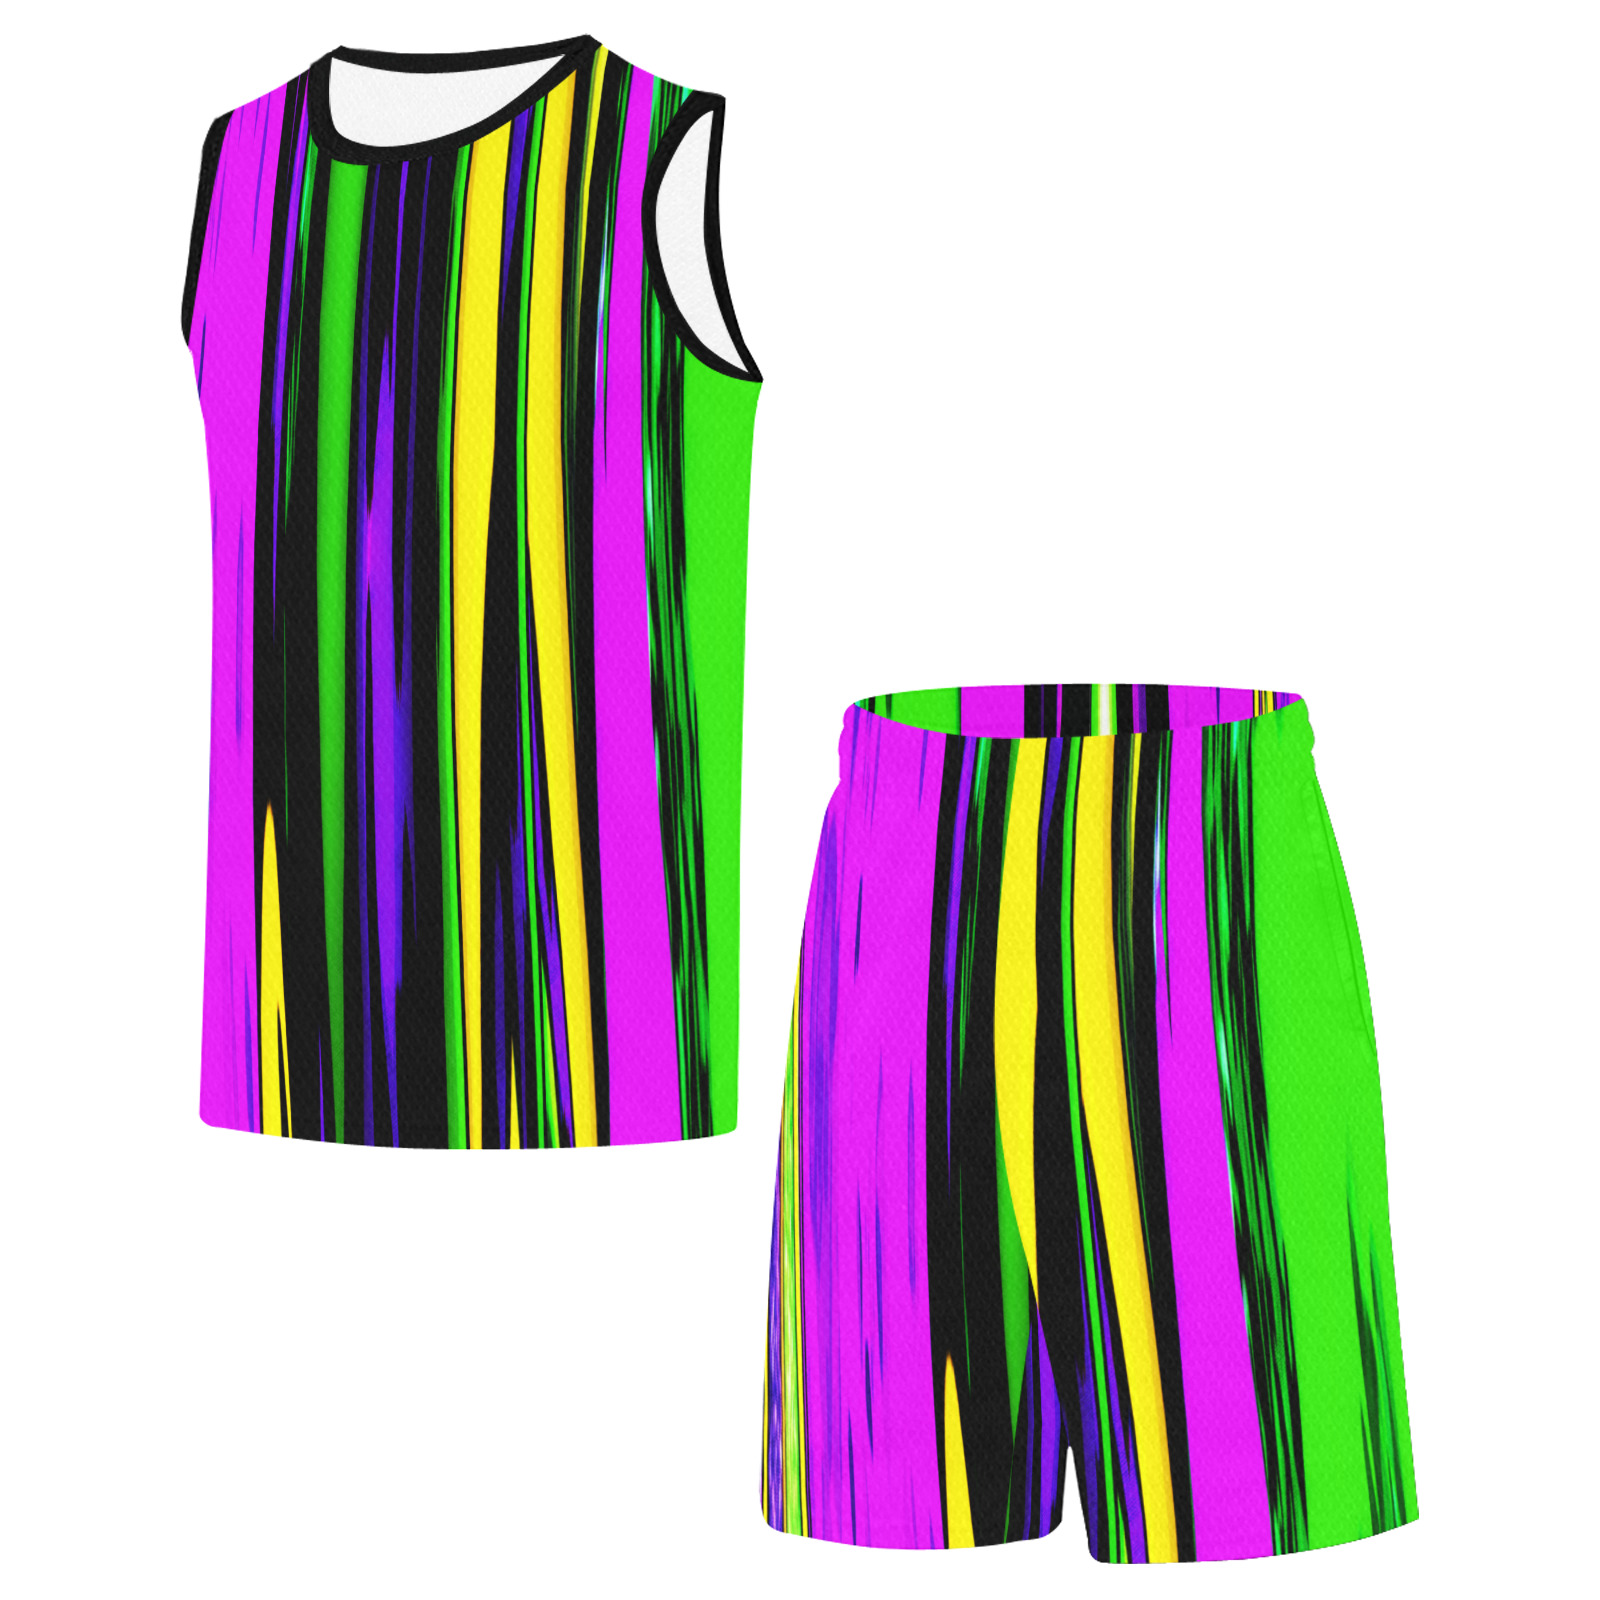 Mardi Gras Stripes Basketball Uniform with Pocket